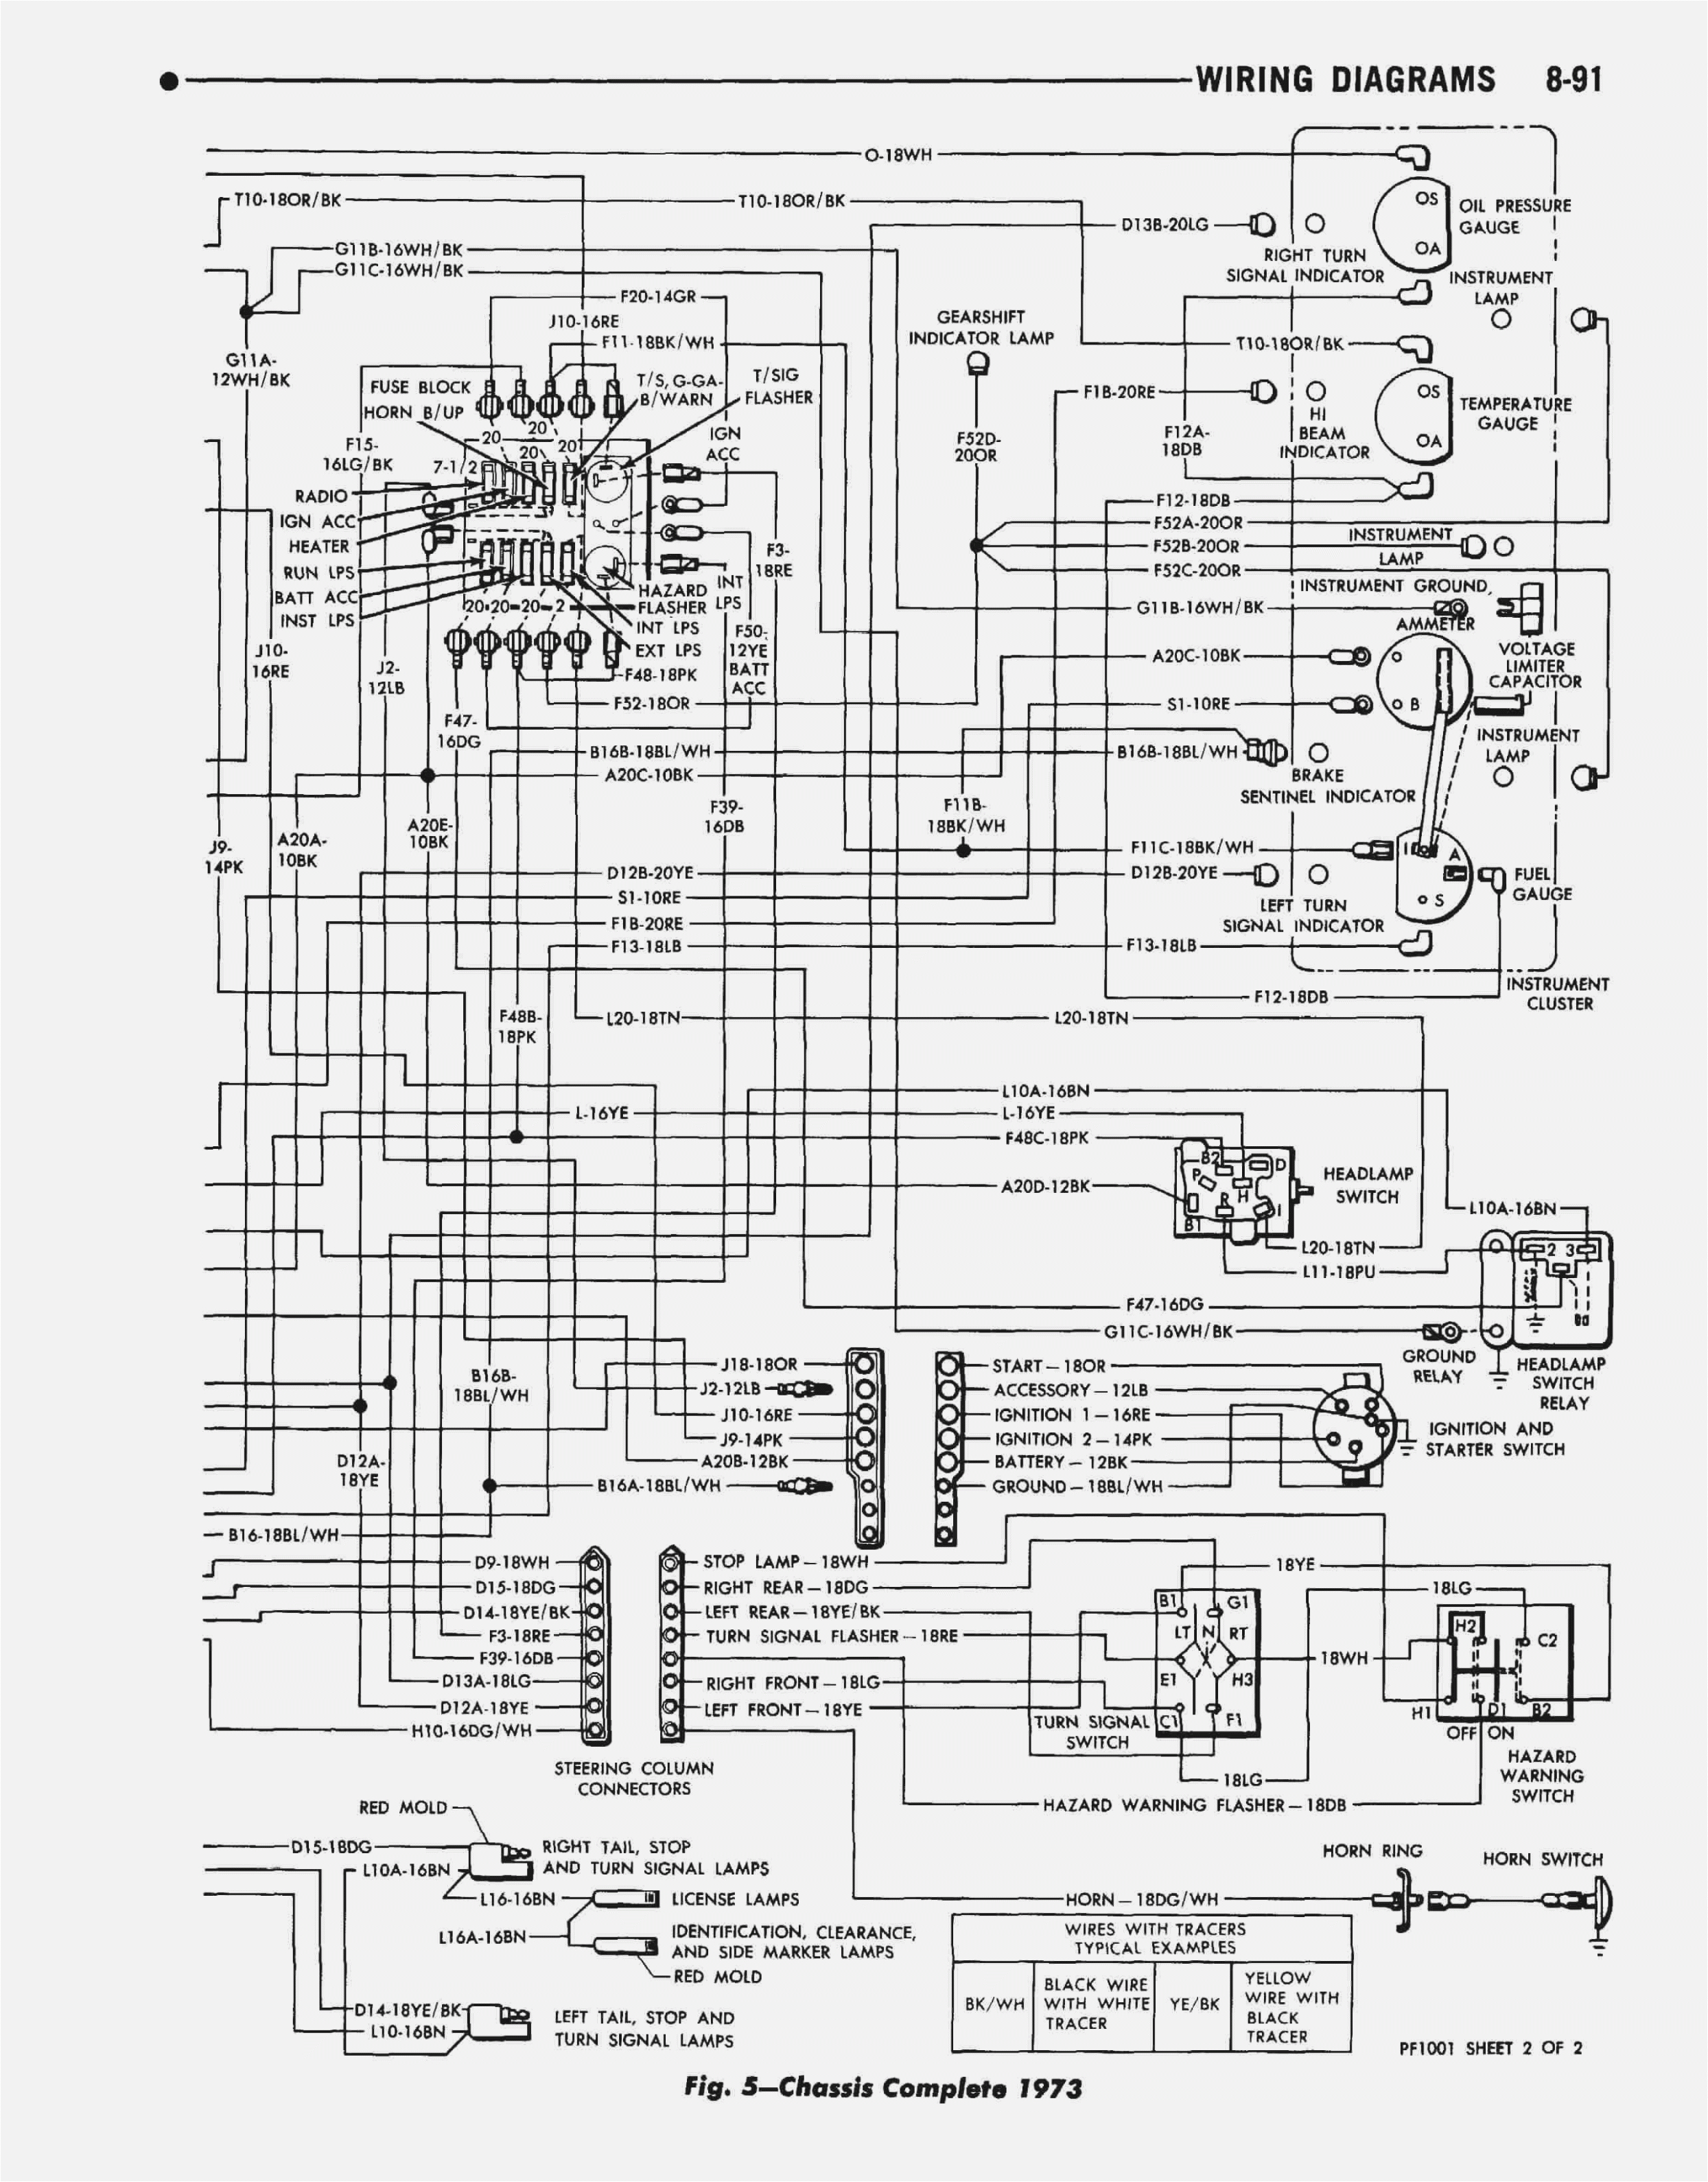 spartan wiring diagrams wiring diagram operations spartan force wiring diagram wiring diagram operations spartan wiring diagrams